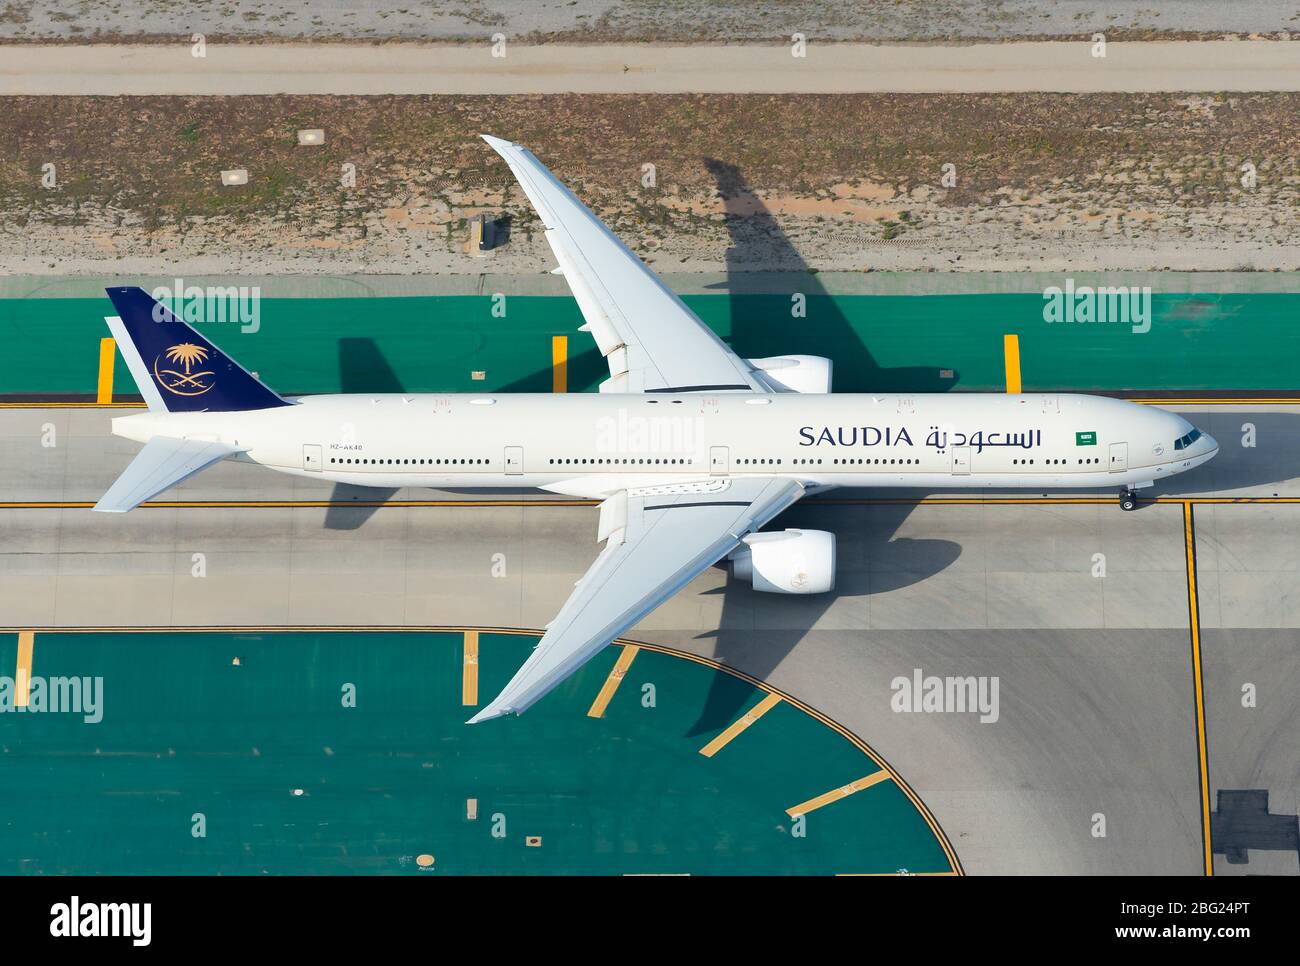 Saudia Airlines Boeing 777 rollt am Los Angeles International Airport. Boeing 777-300 Flugzeug HZ-AK40 Luftaufnahme. Saudi Arabian Airlines. Stockfoto